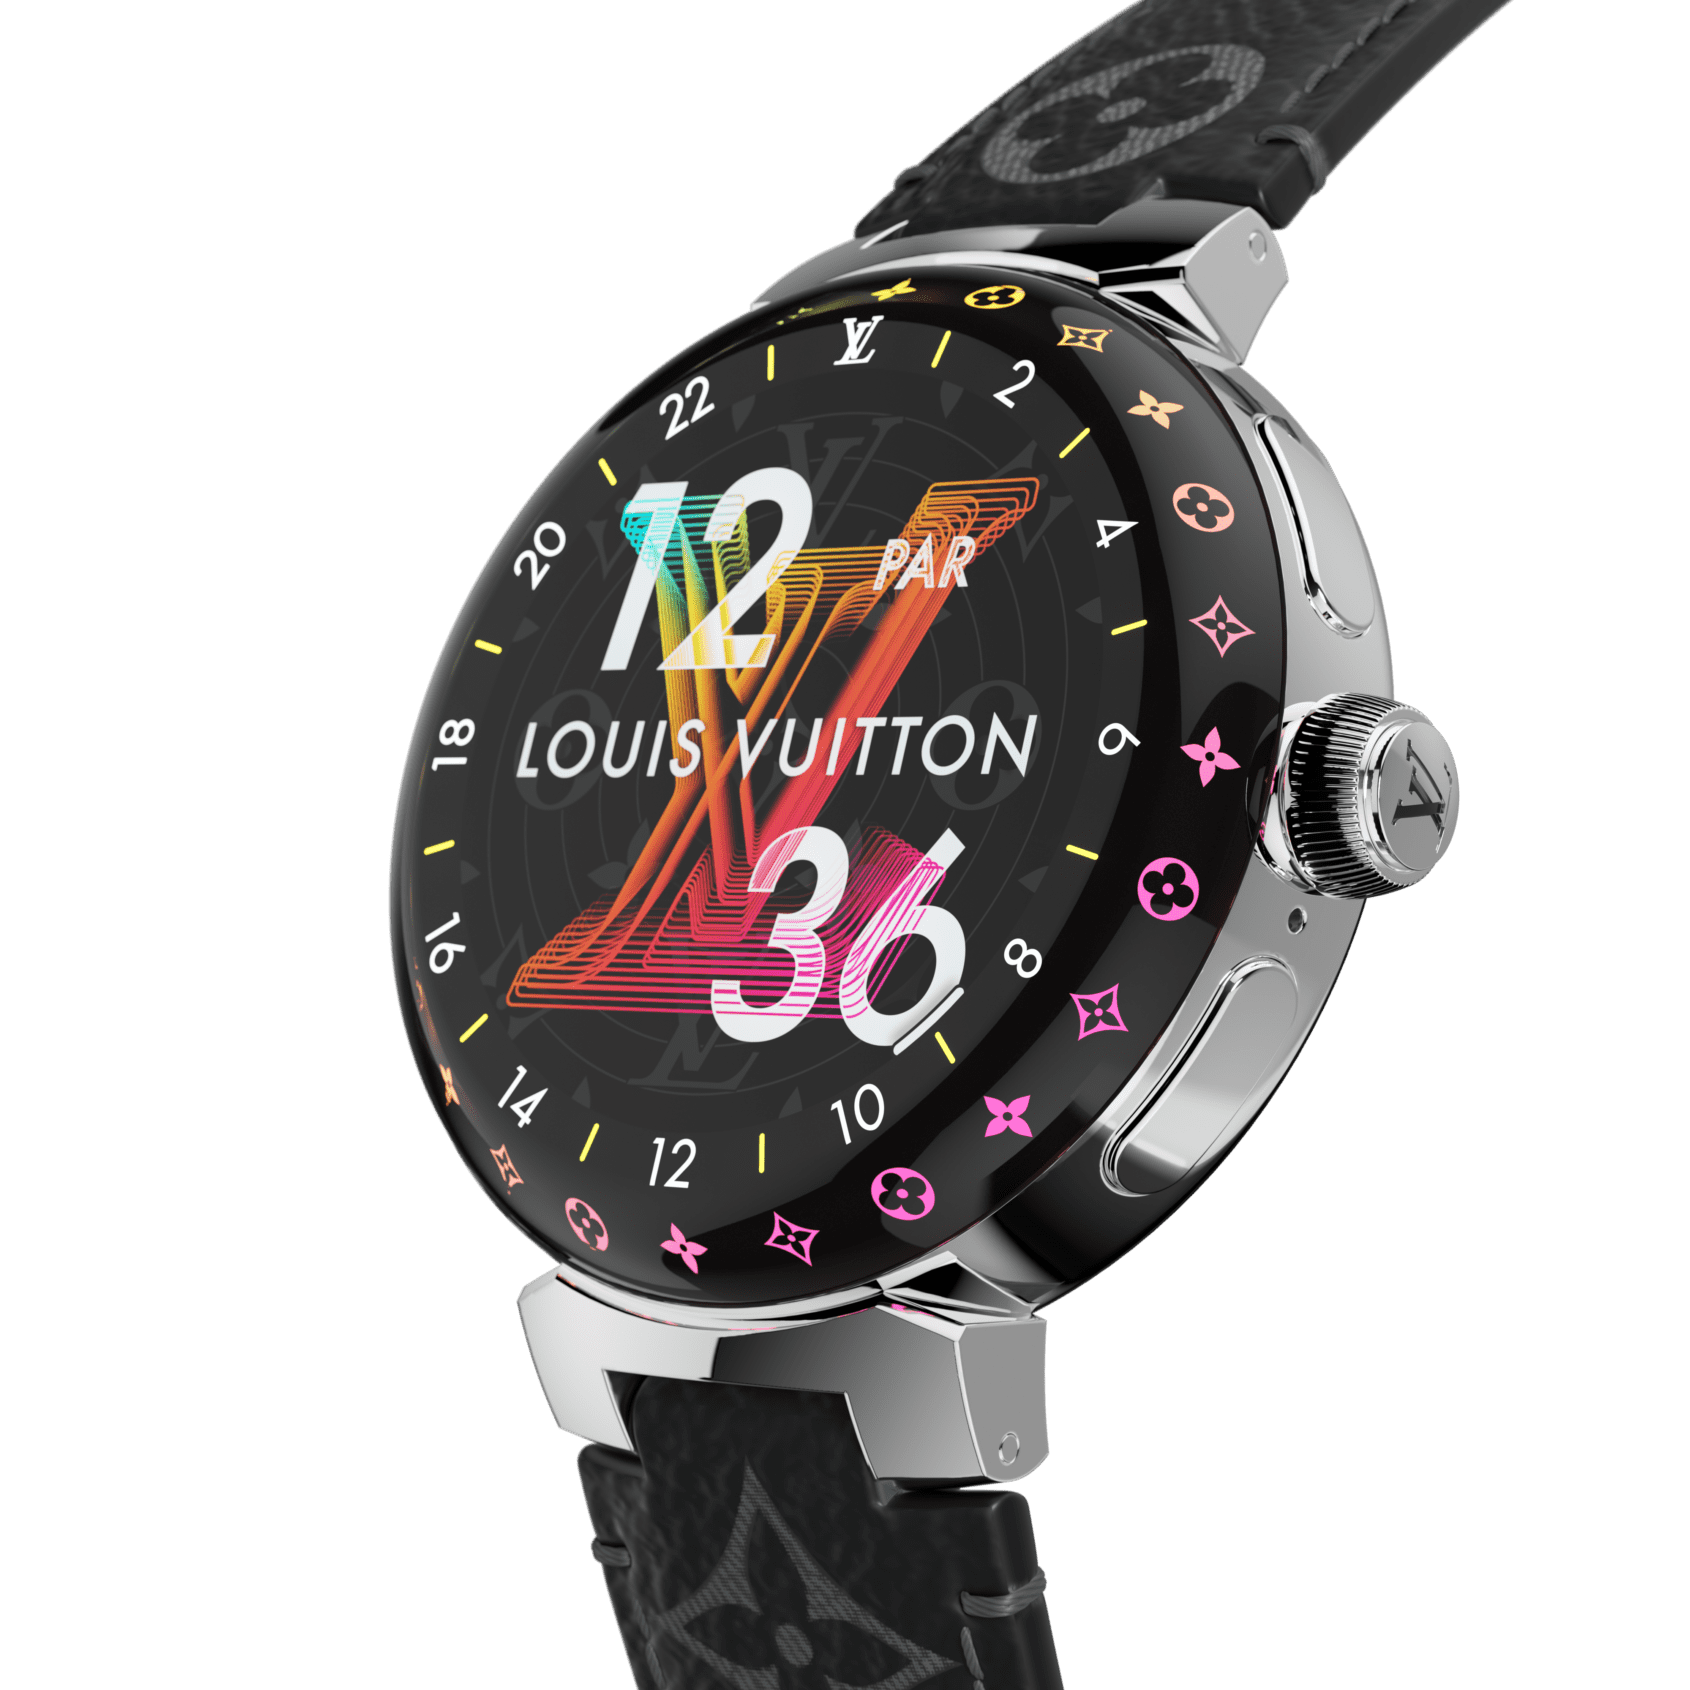 Lv smart watch price